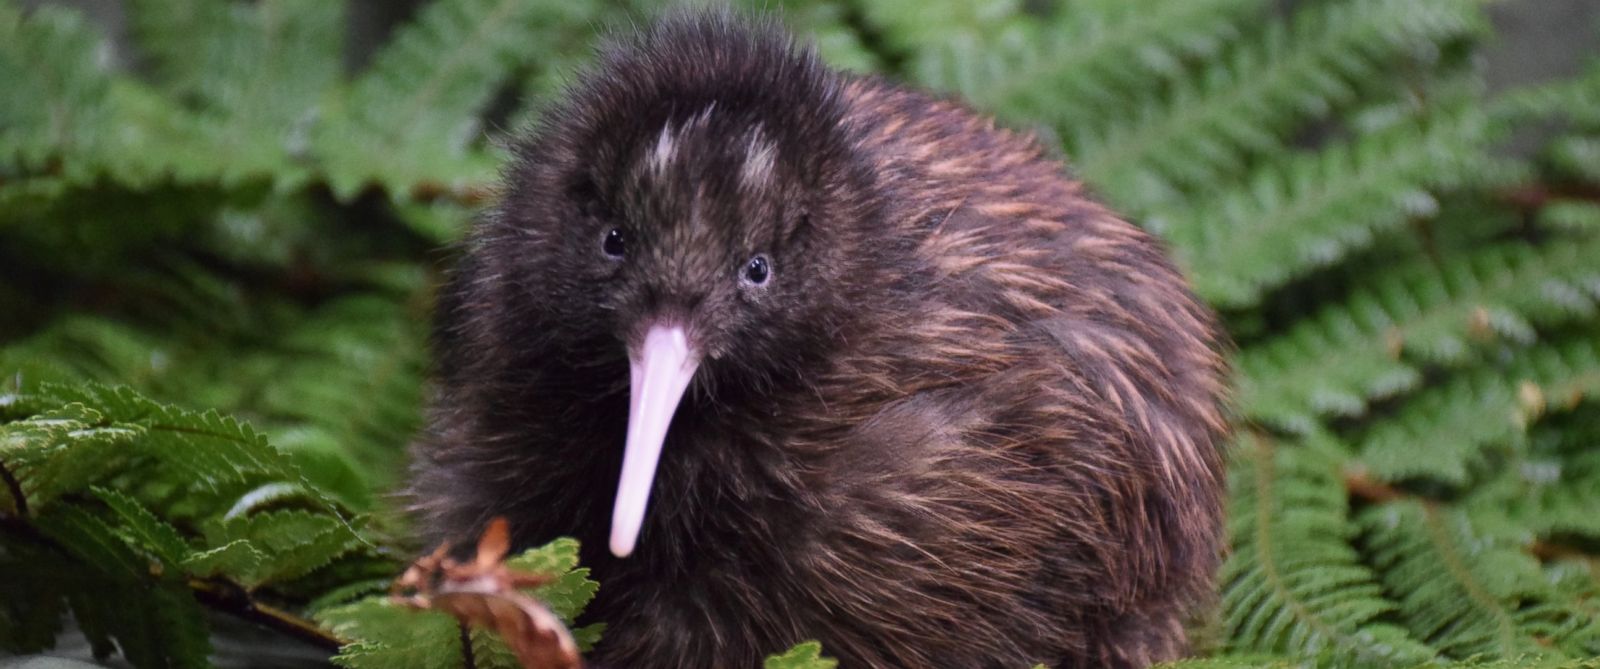 Image result for kiwi bird new zealand egg fissure